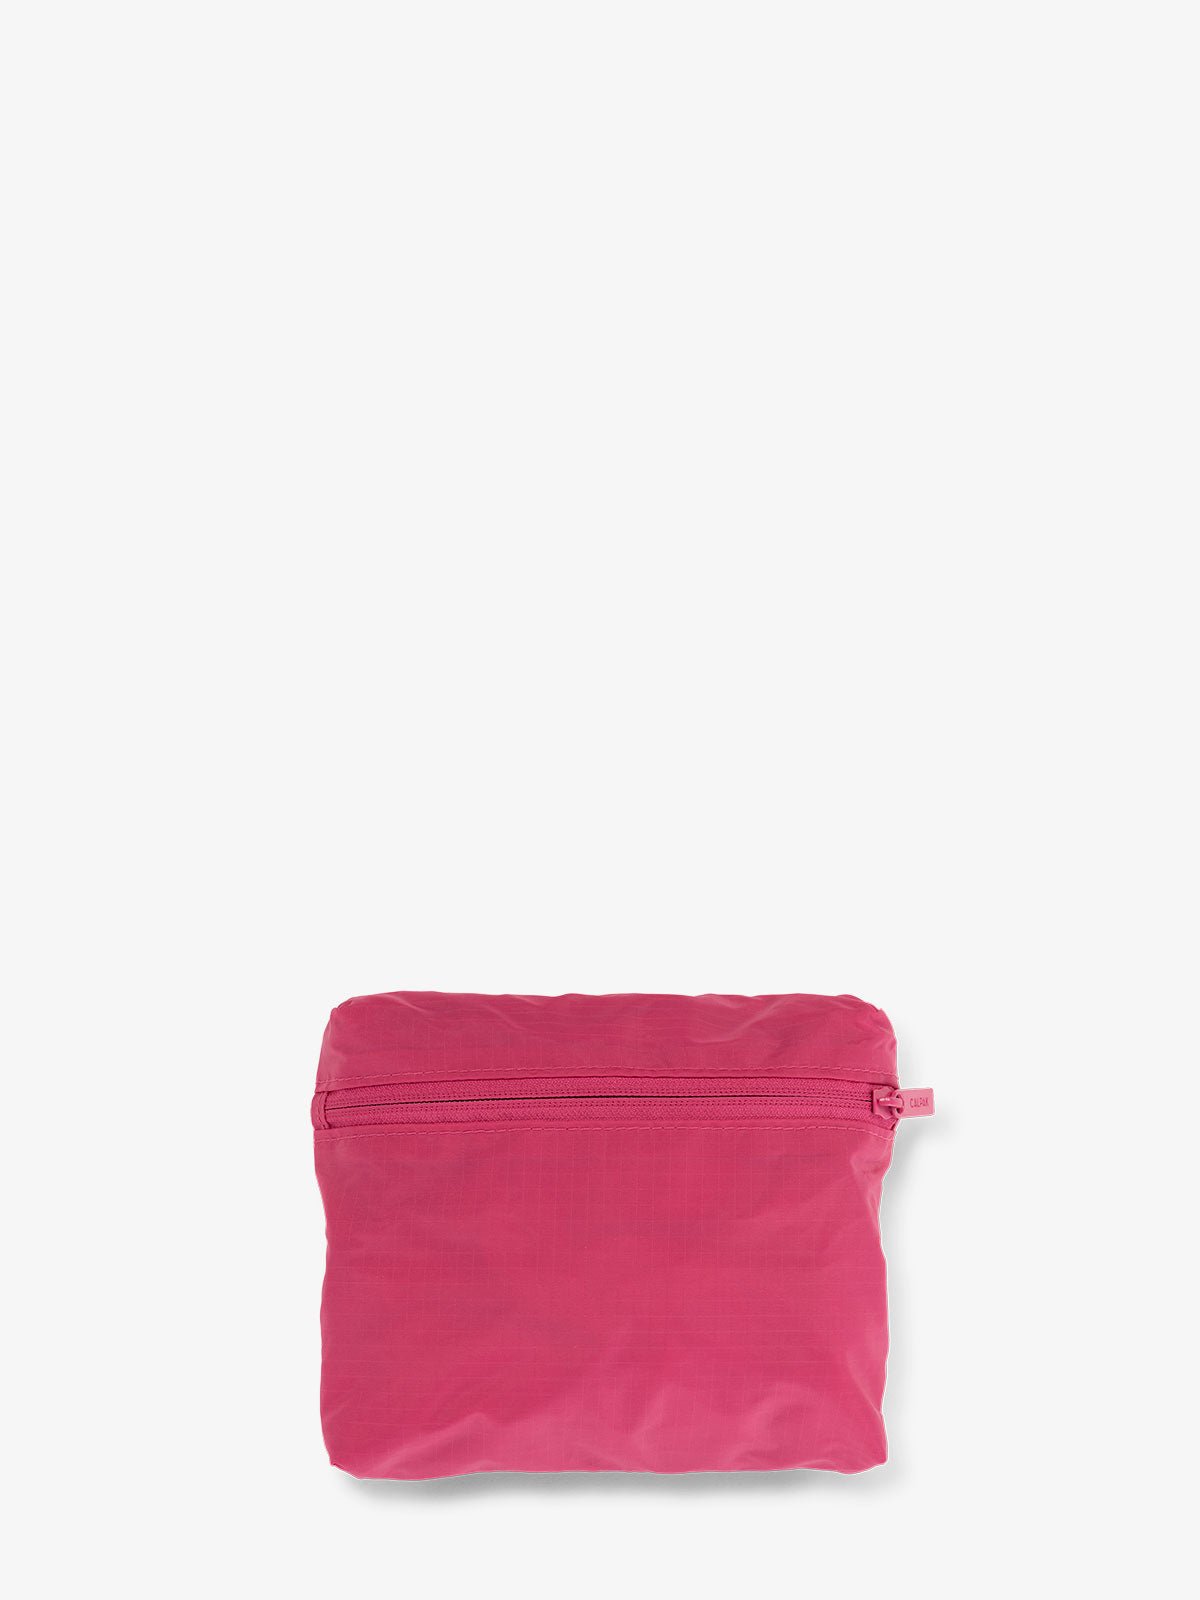 CALPAK Compakt foldable tote bag in pink